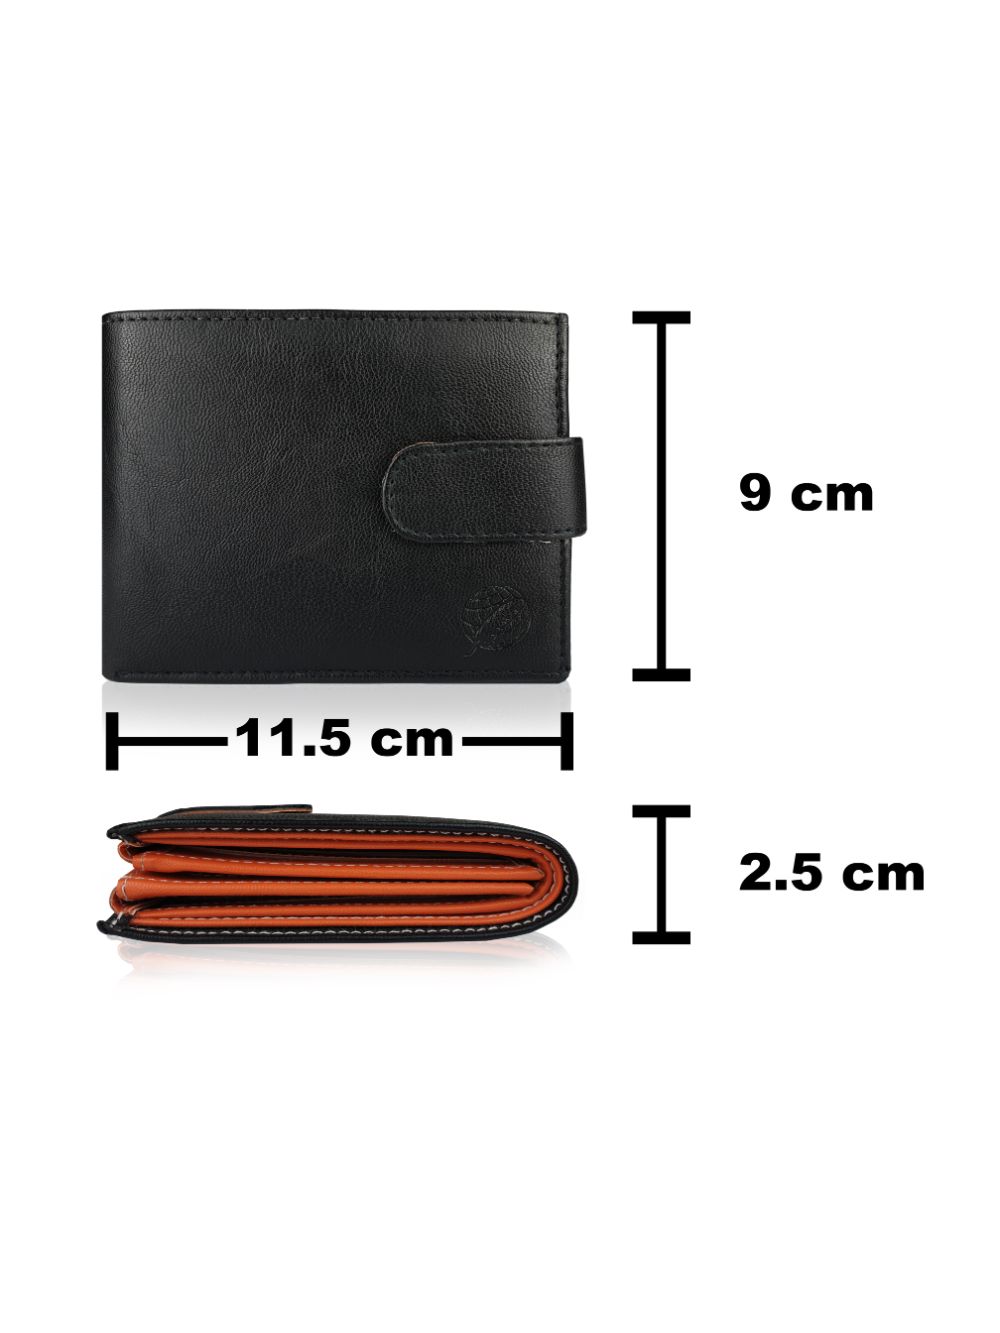 Mens Designer Wallet genuine Leather Coin Purse Black Limited Stock | eBay